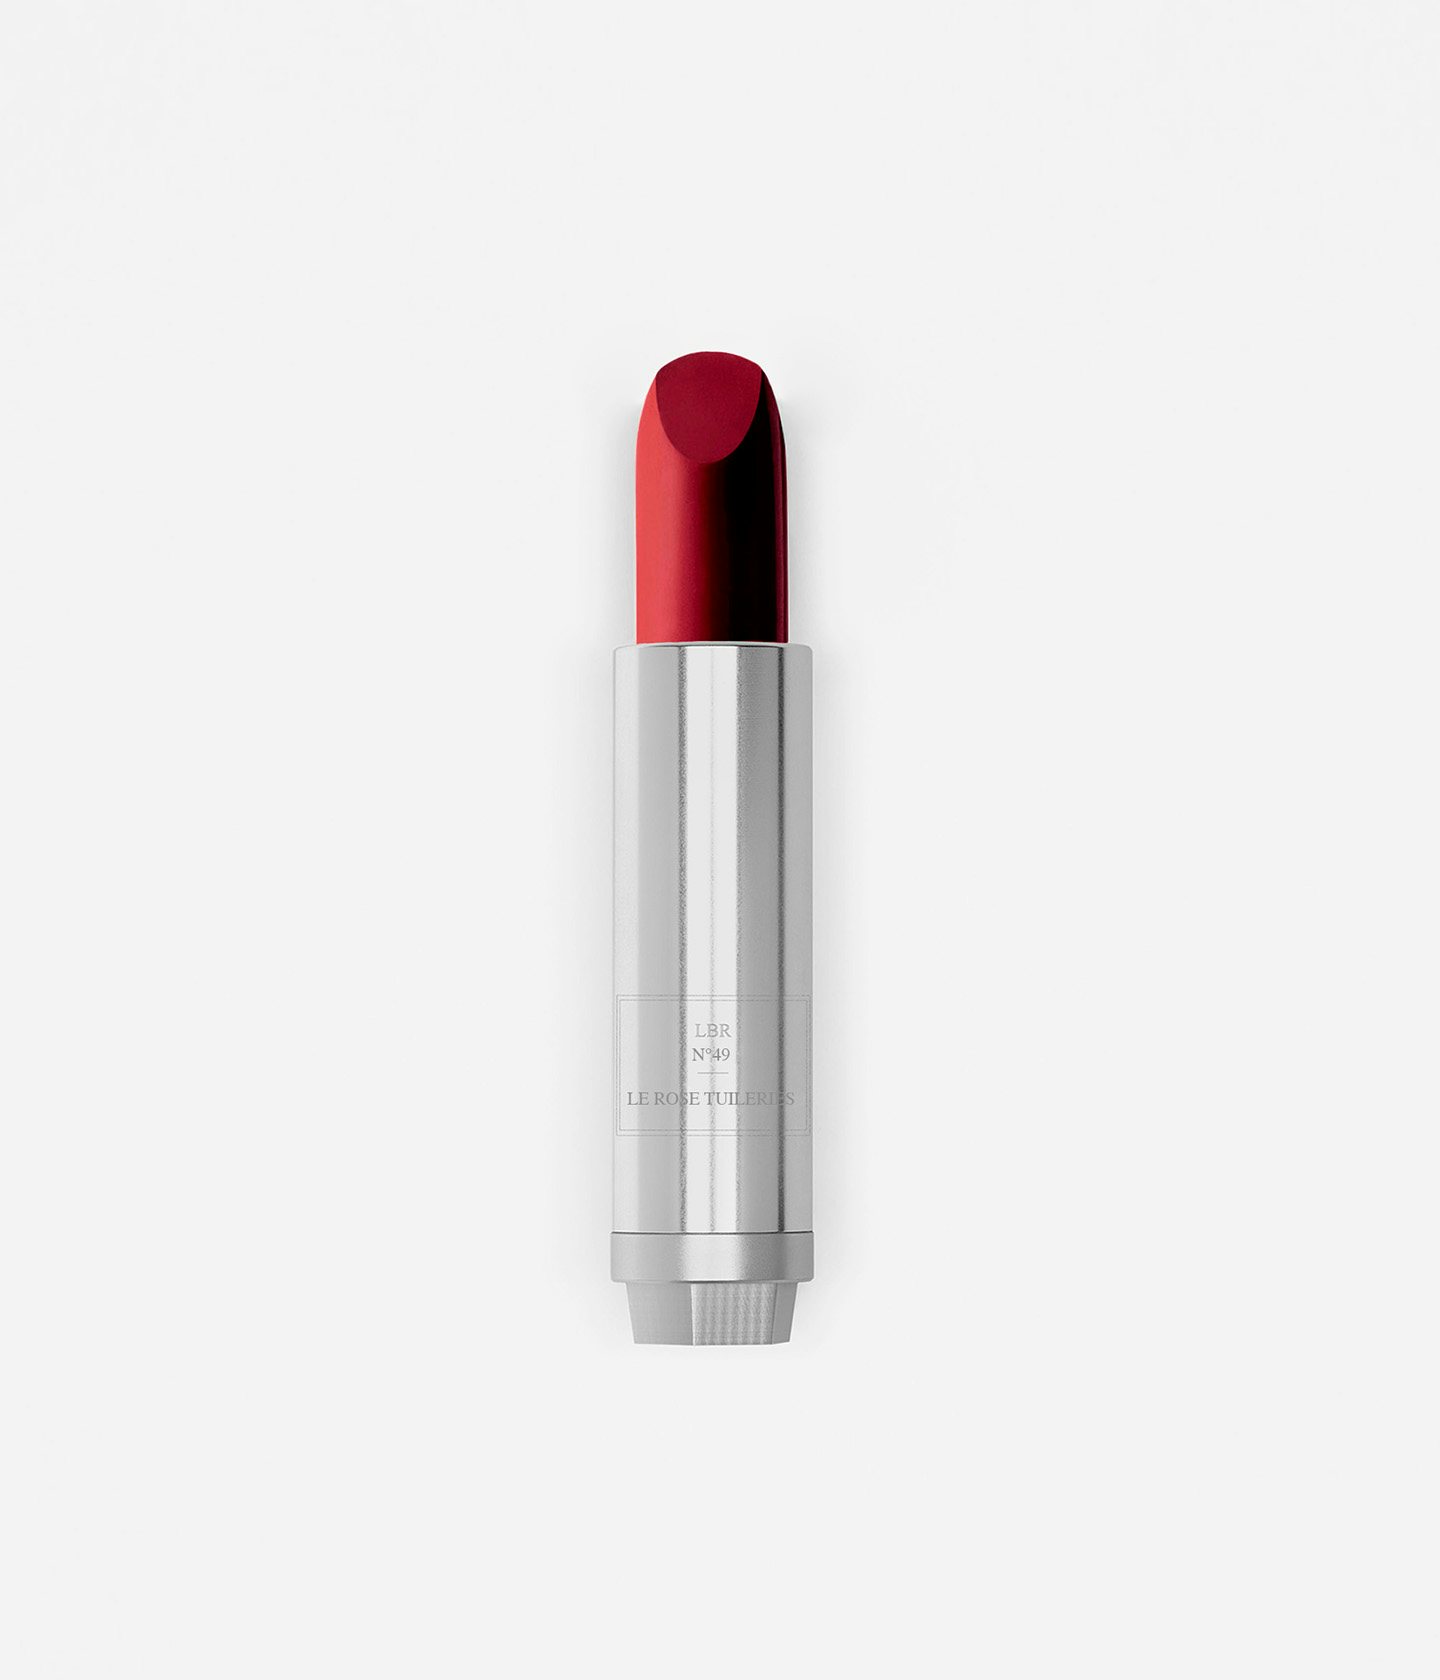 La bouche rouge Le Rose Tuileries lipstick in metal refill